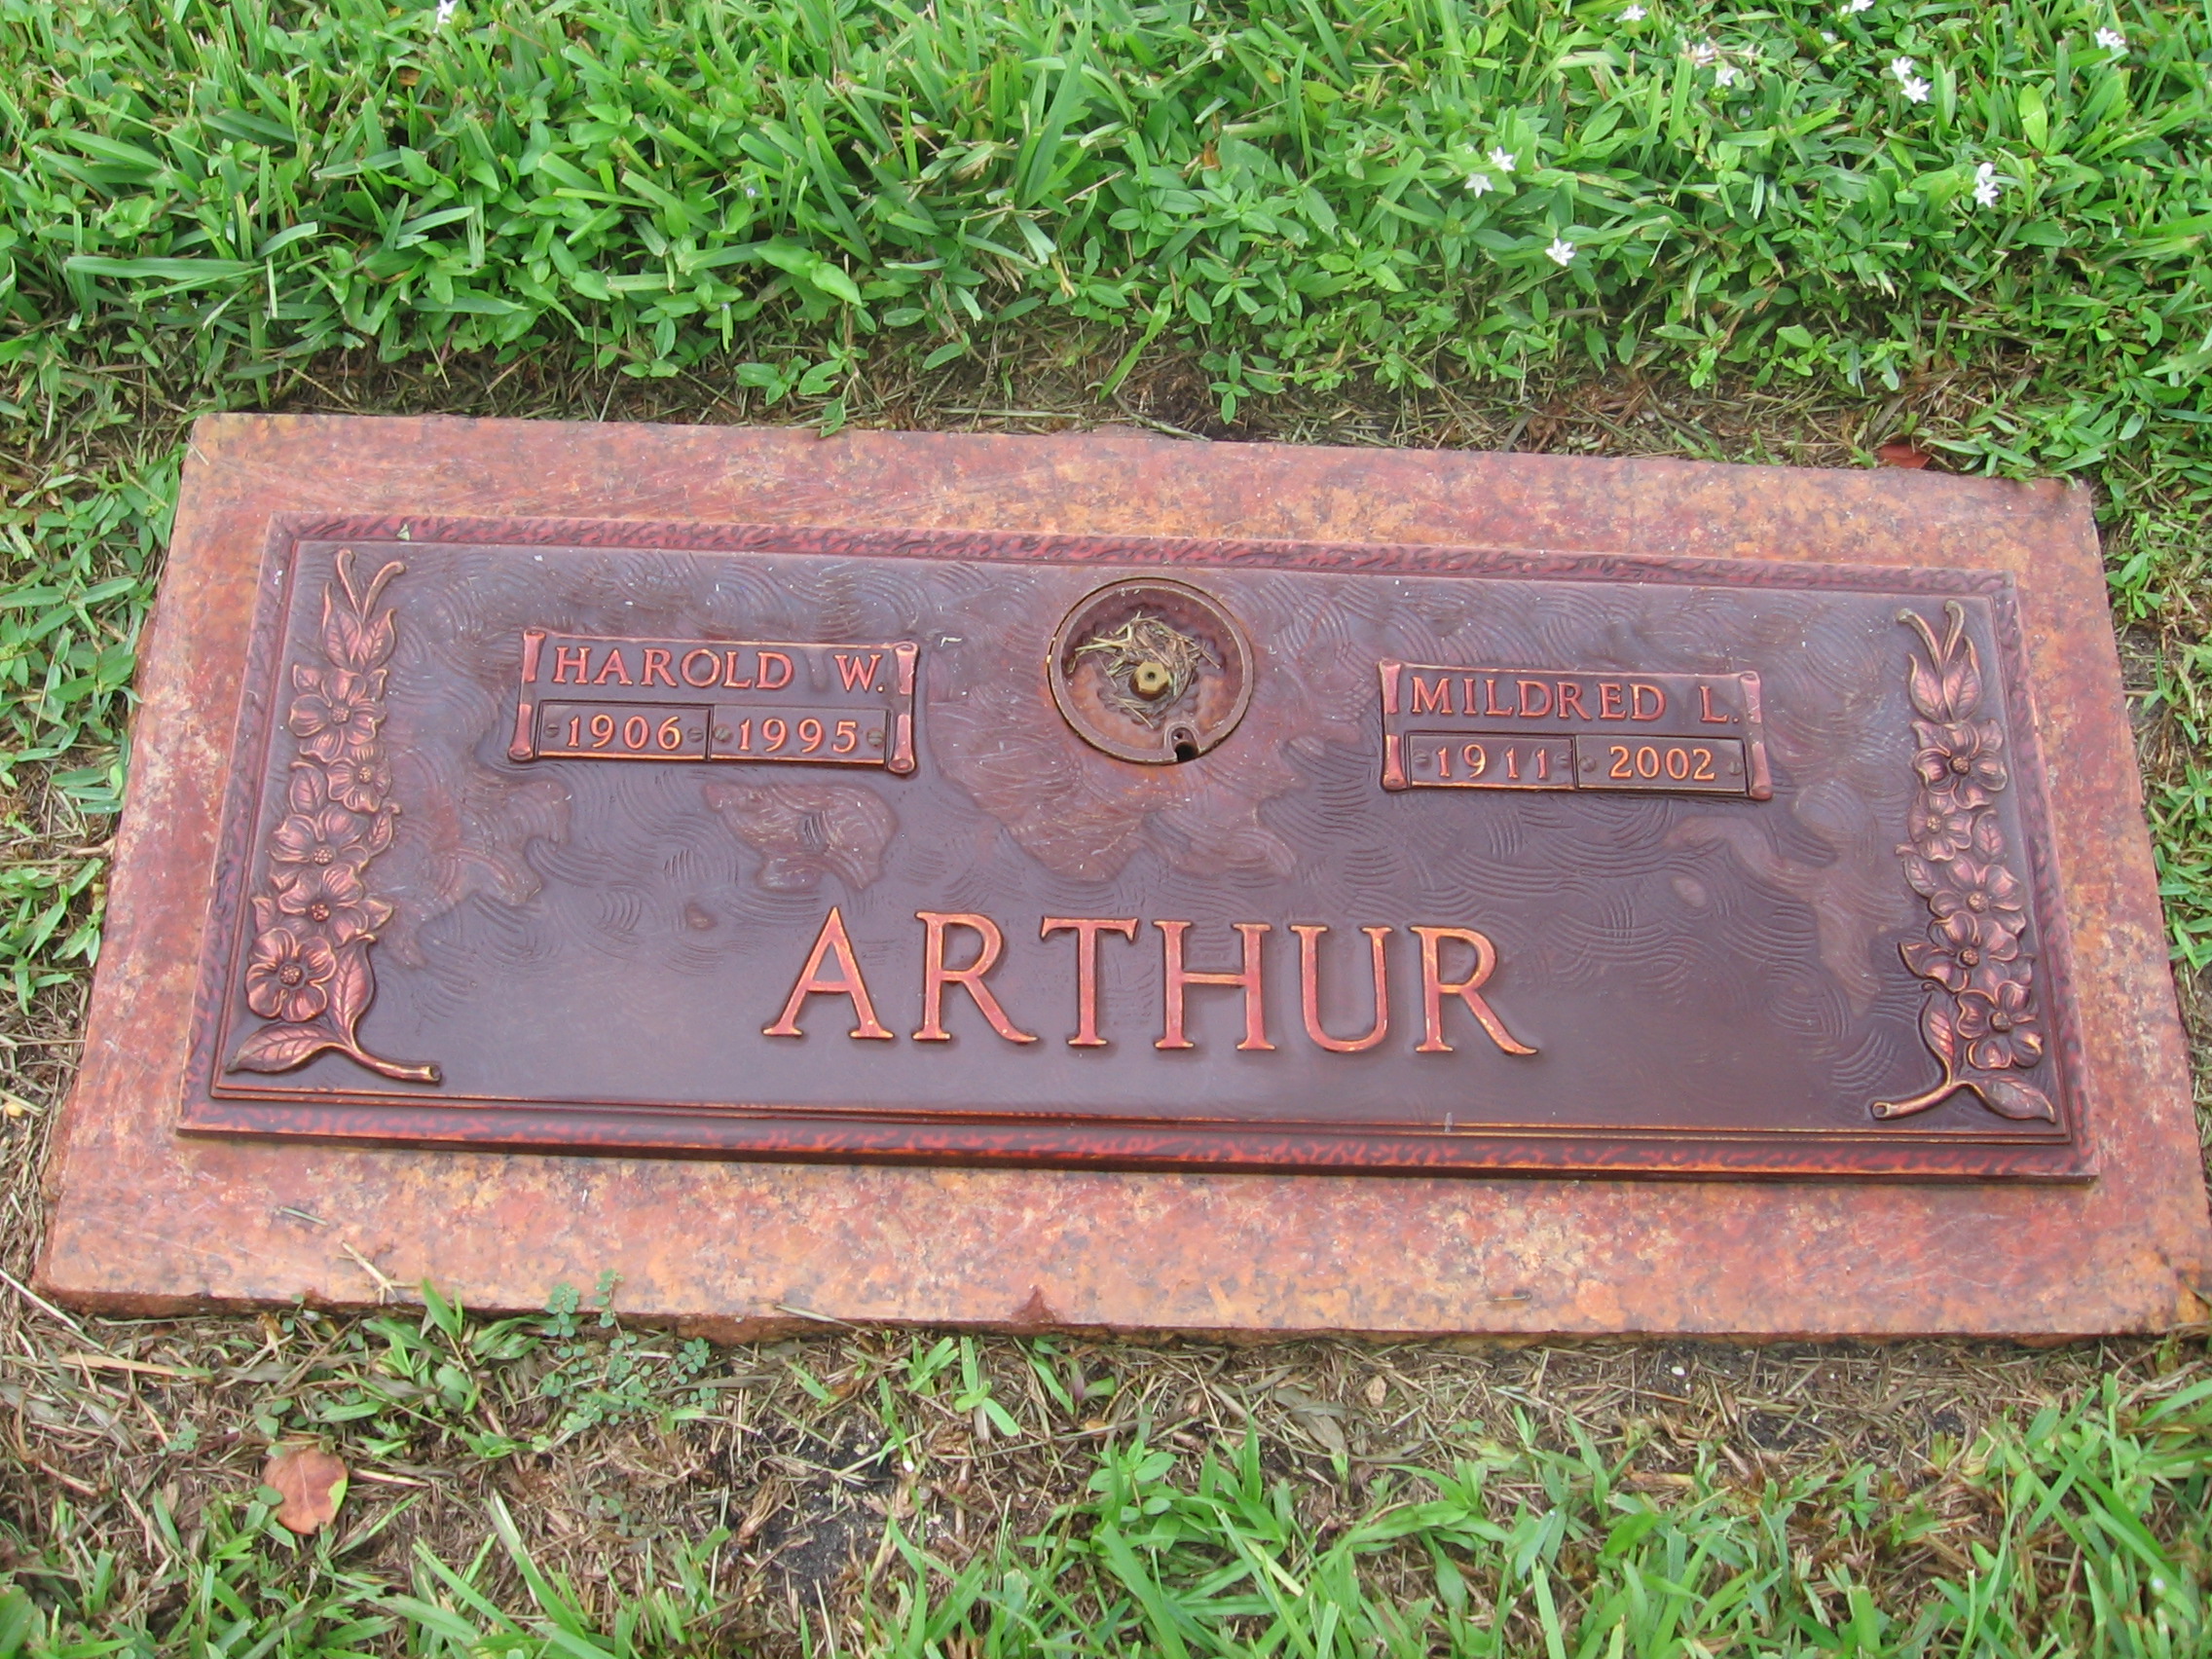 Harold W Arthur